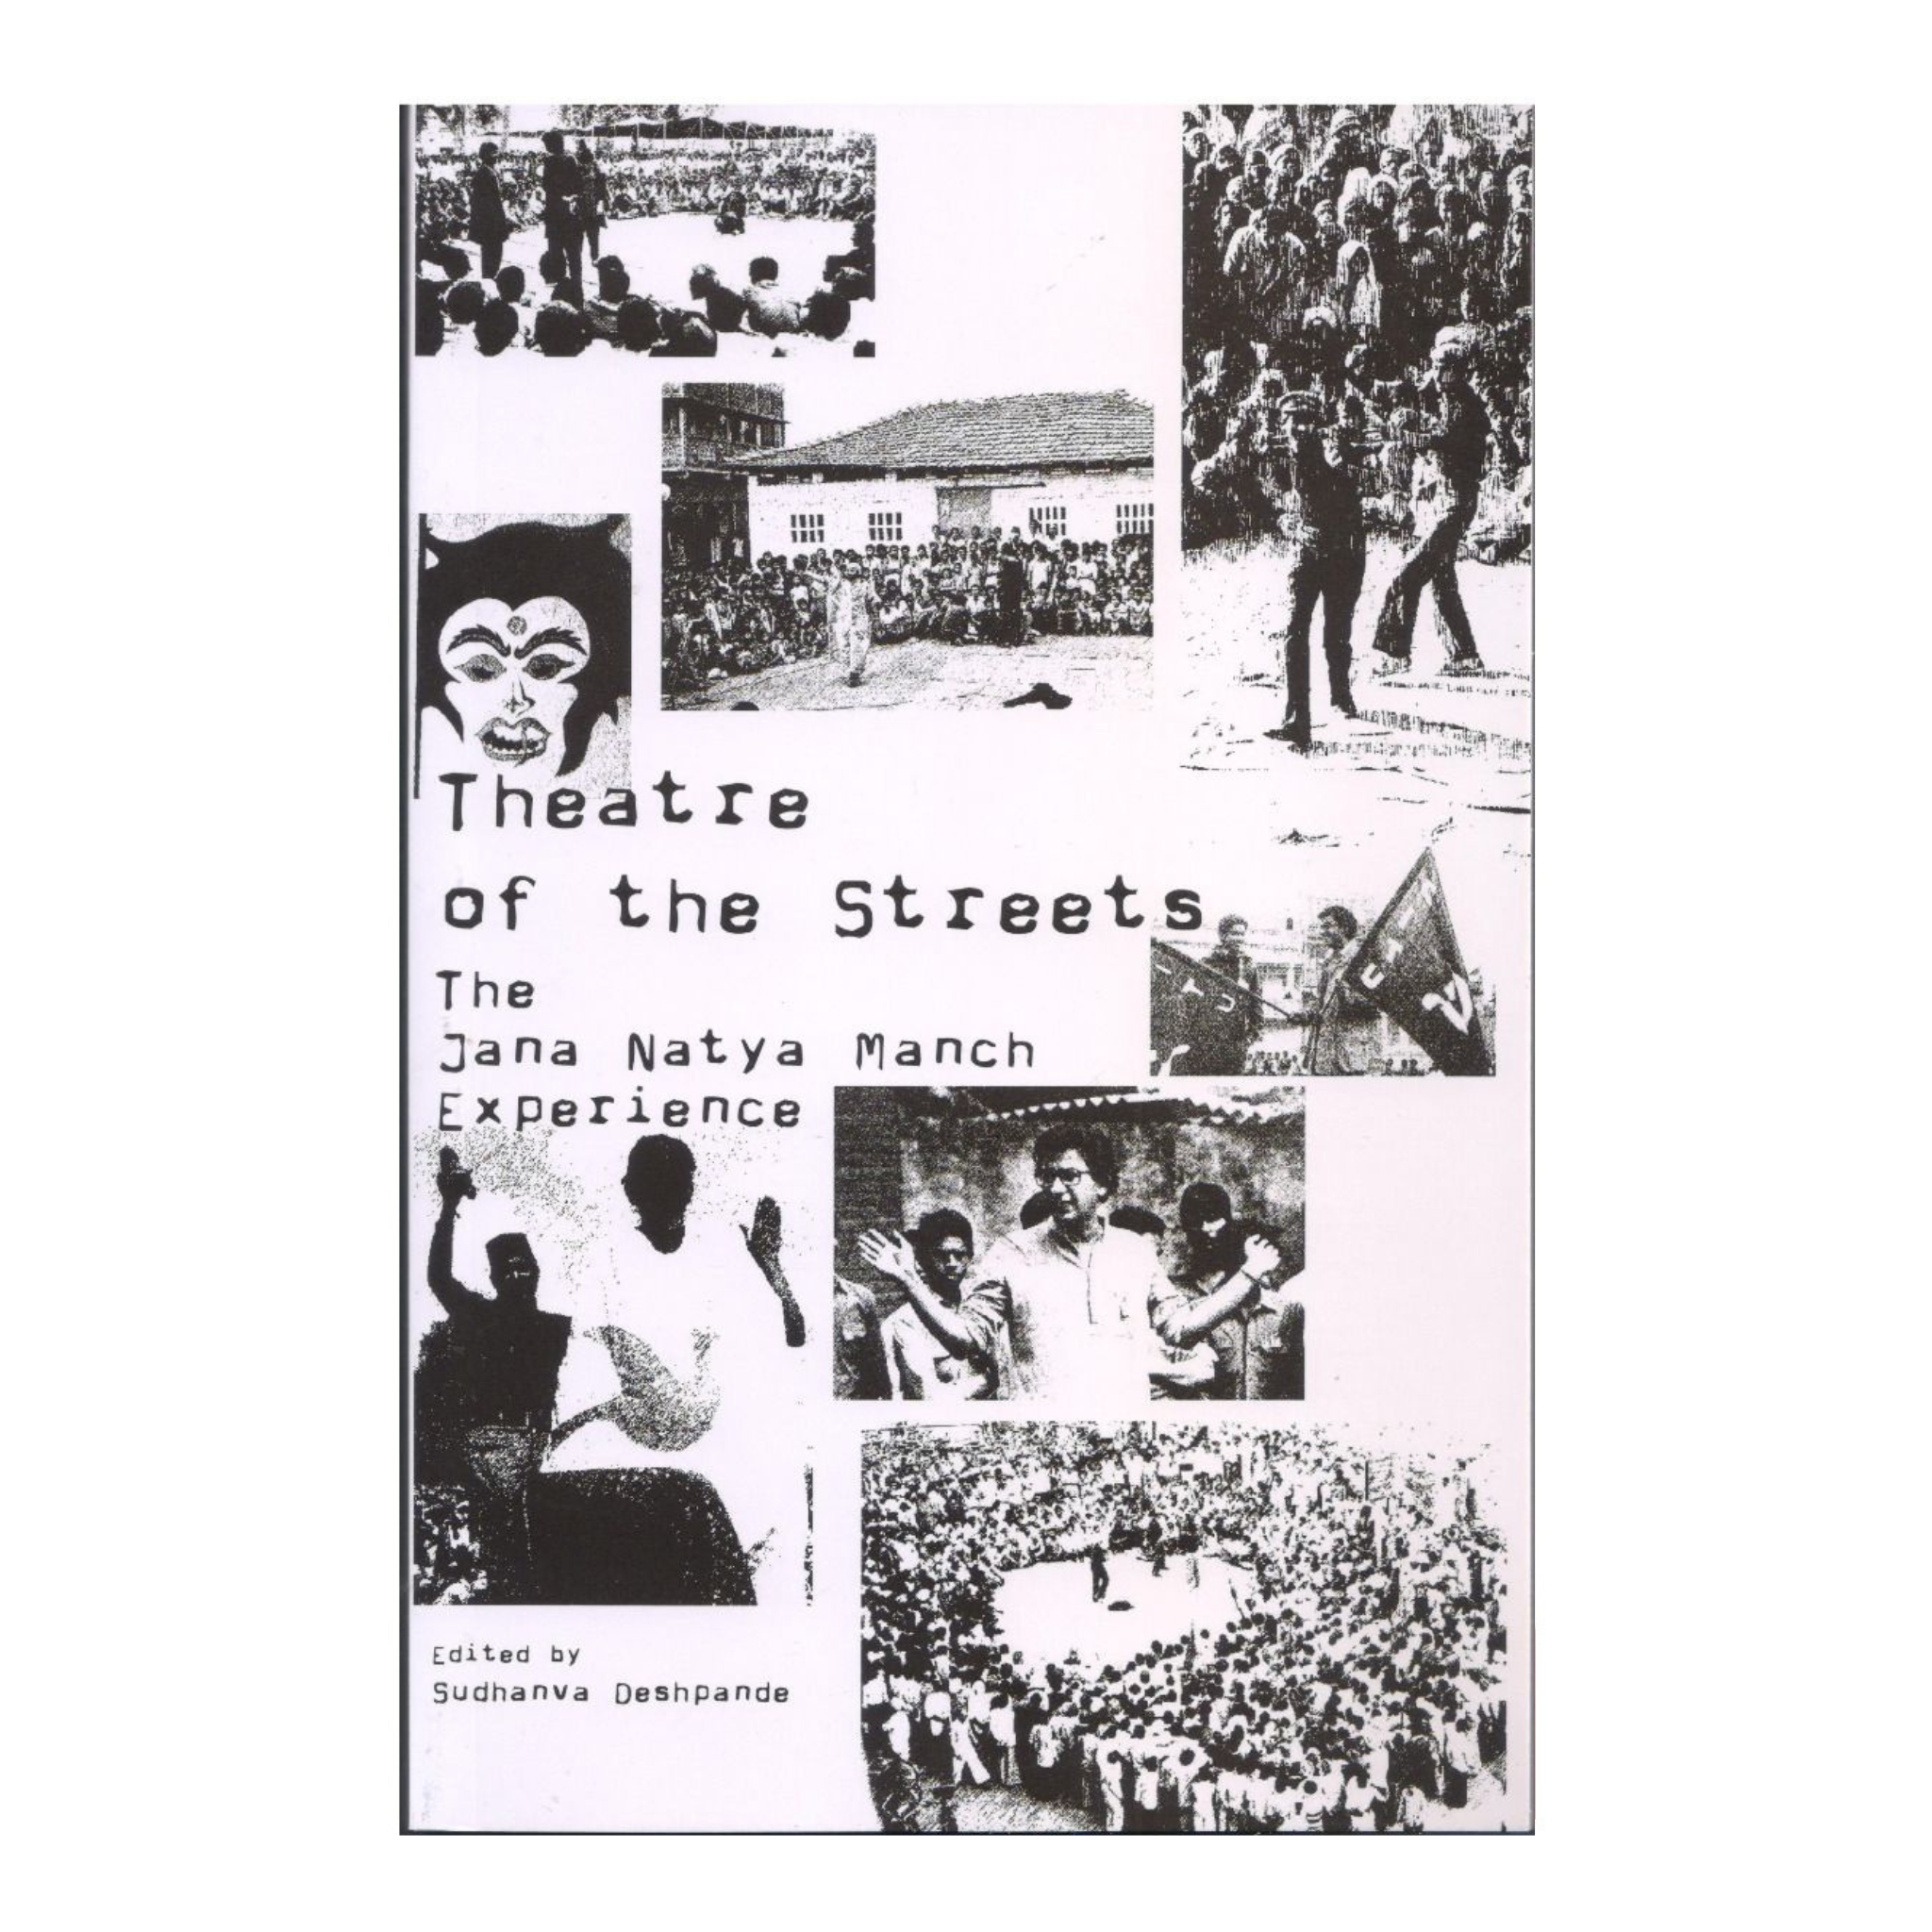 Theatre of the Streets: The Jana Natya Manch Experience